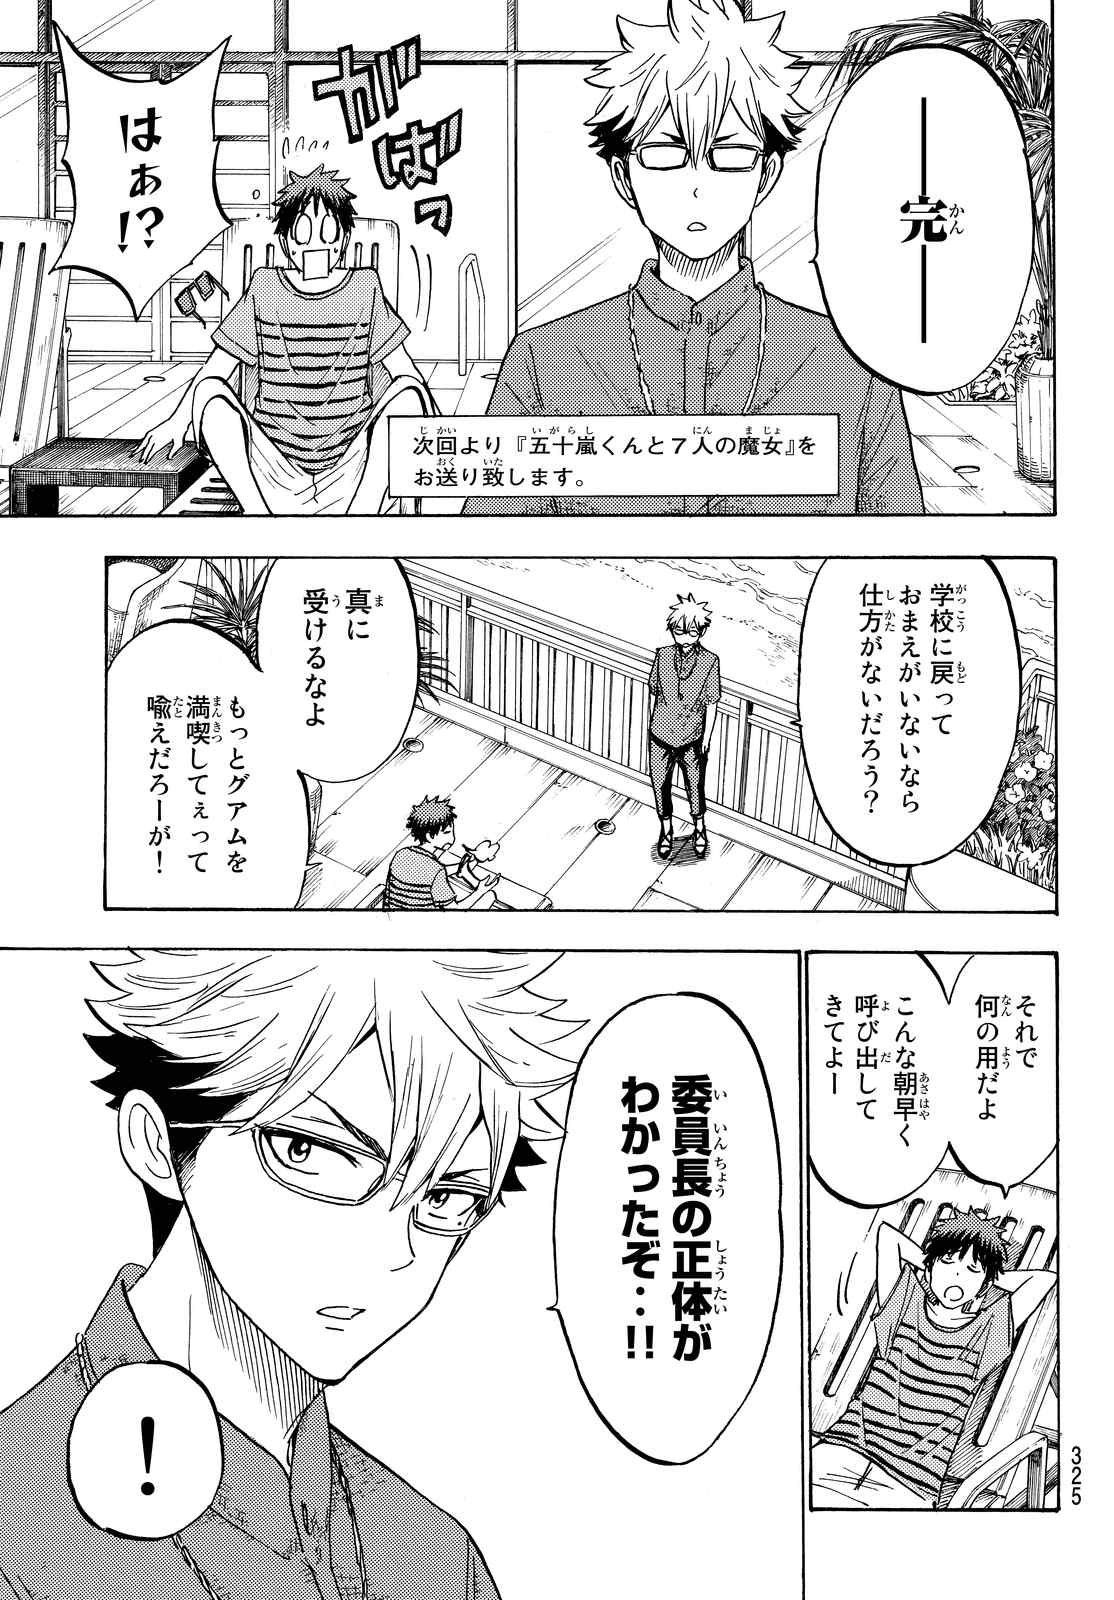 Yamada-kun to 7-nin no Majo - Chapter 205 - Page 3